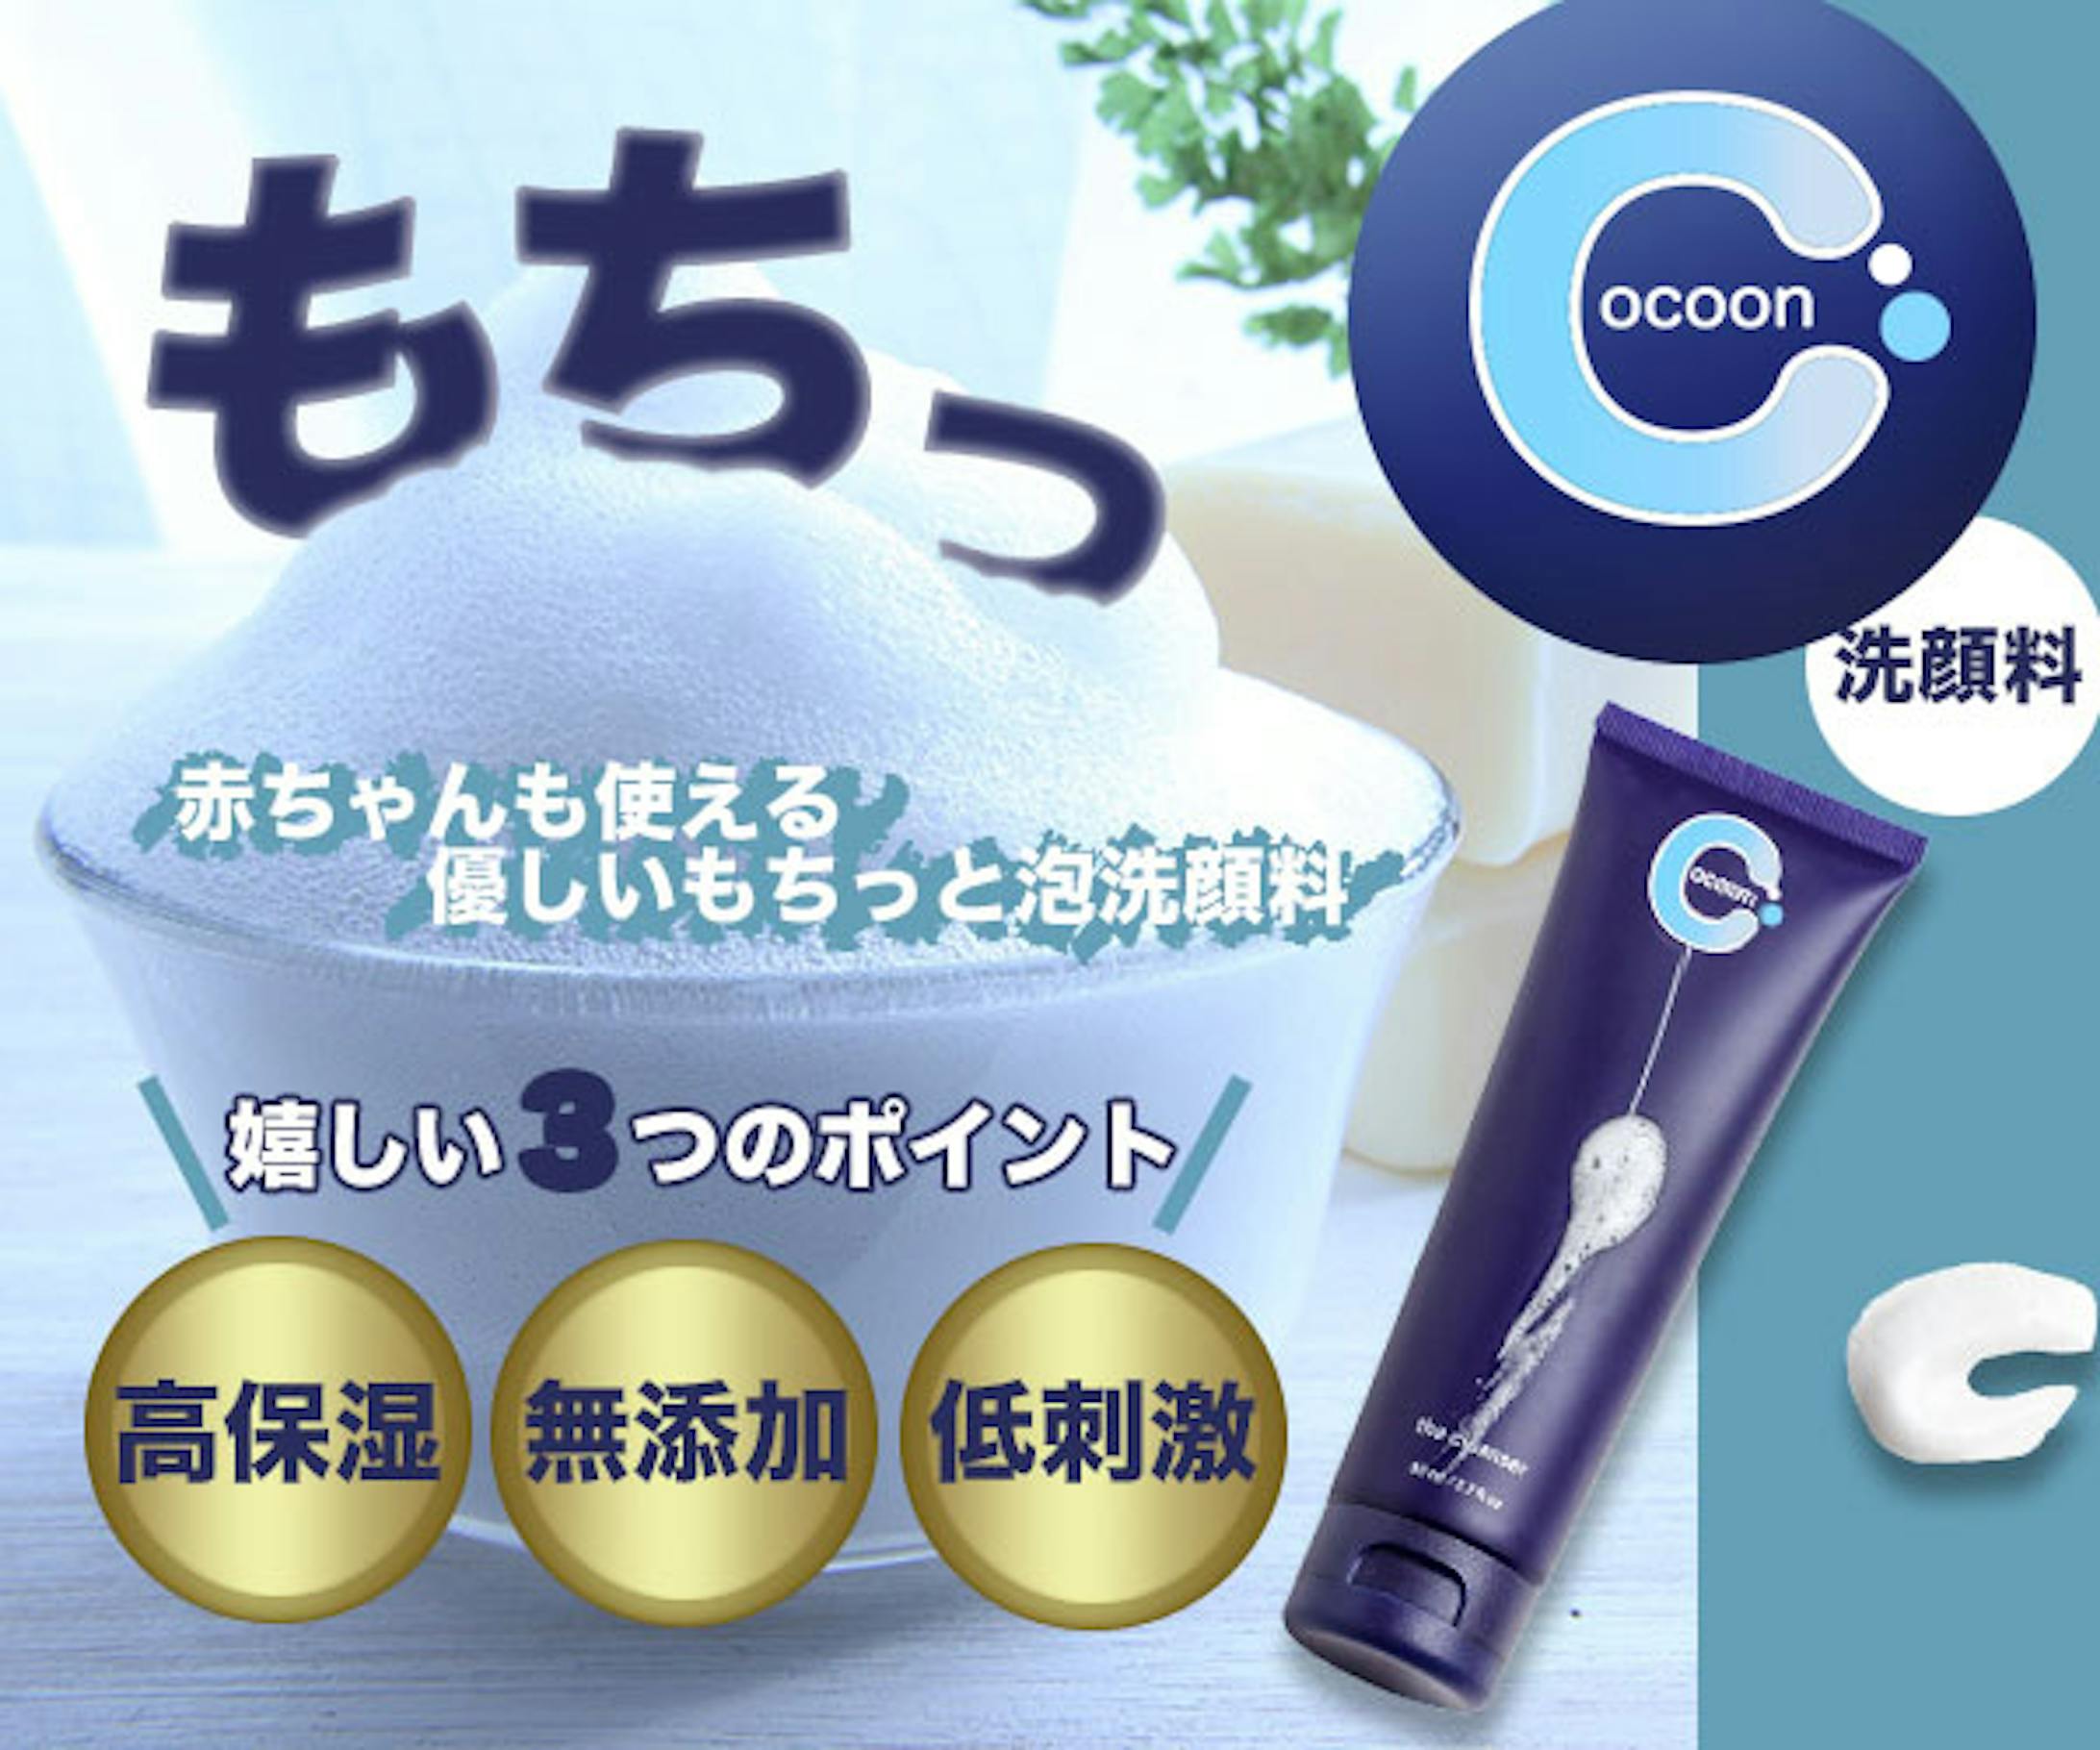 Cocoon(洗顔フォーム)-1